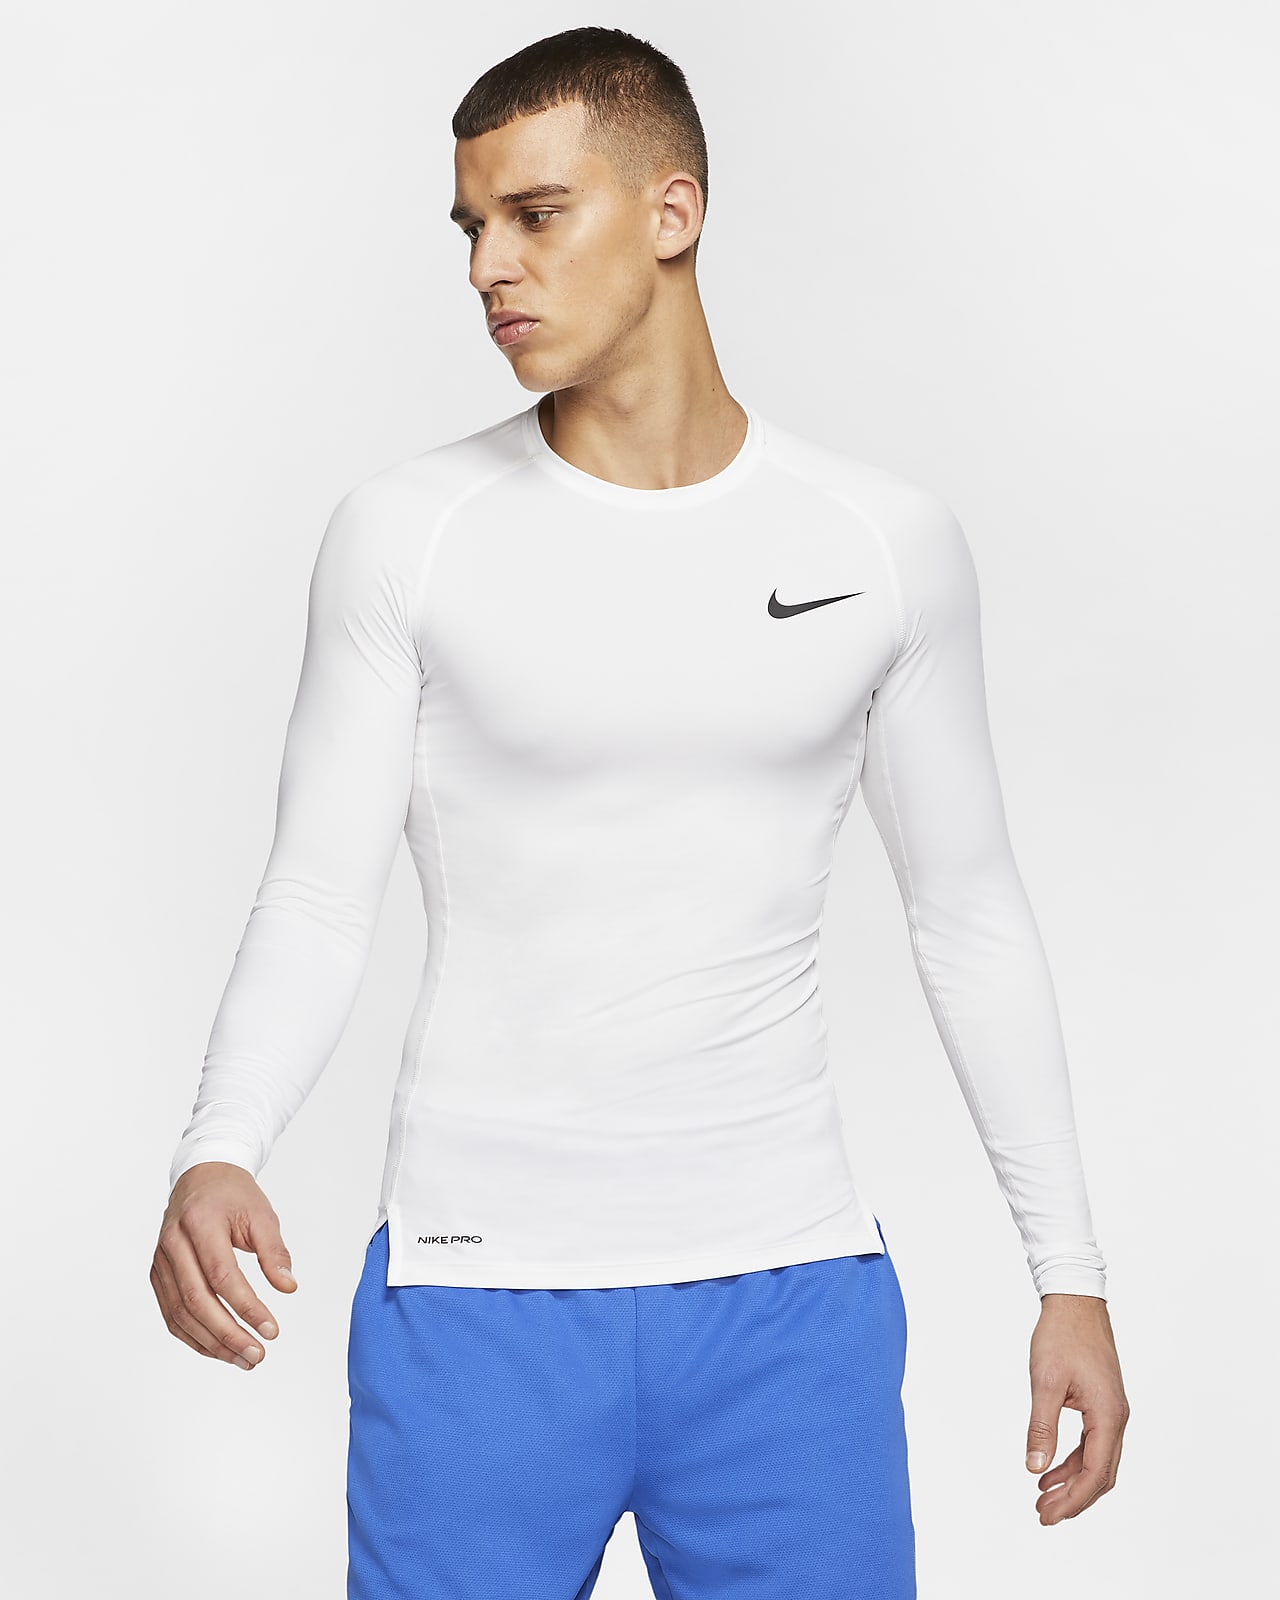 Nike Pro Men's Tight-Fit Long-Sleeve Top. Nike CA